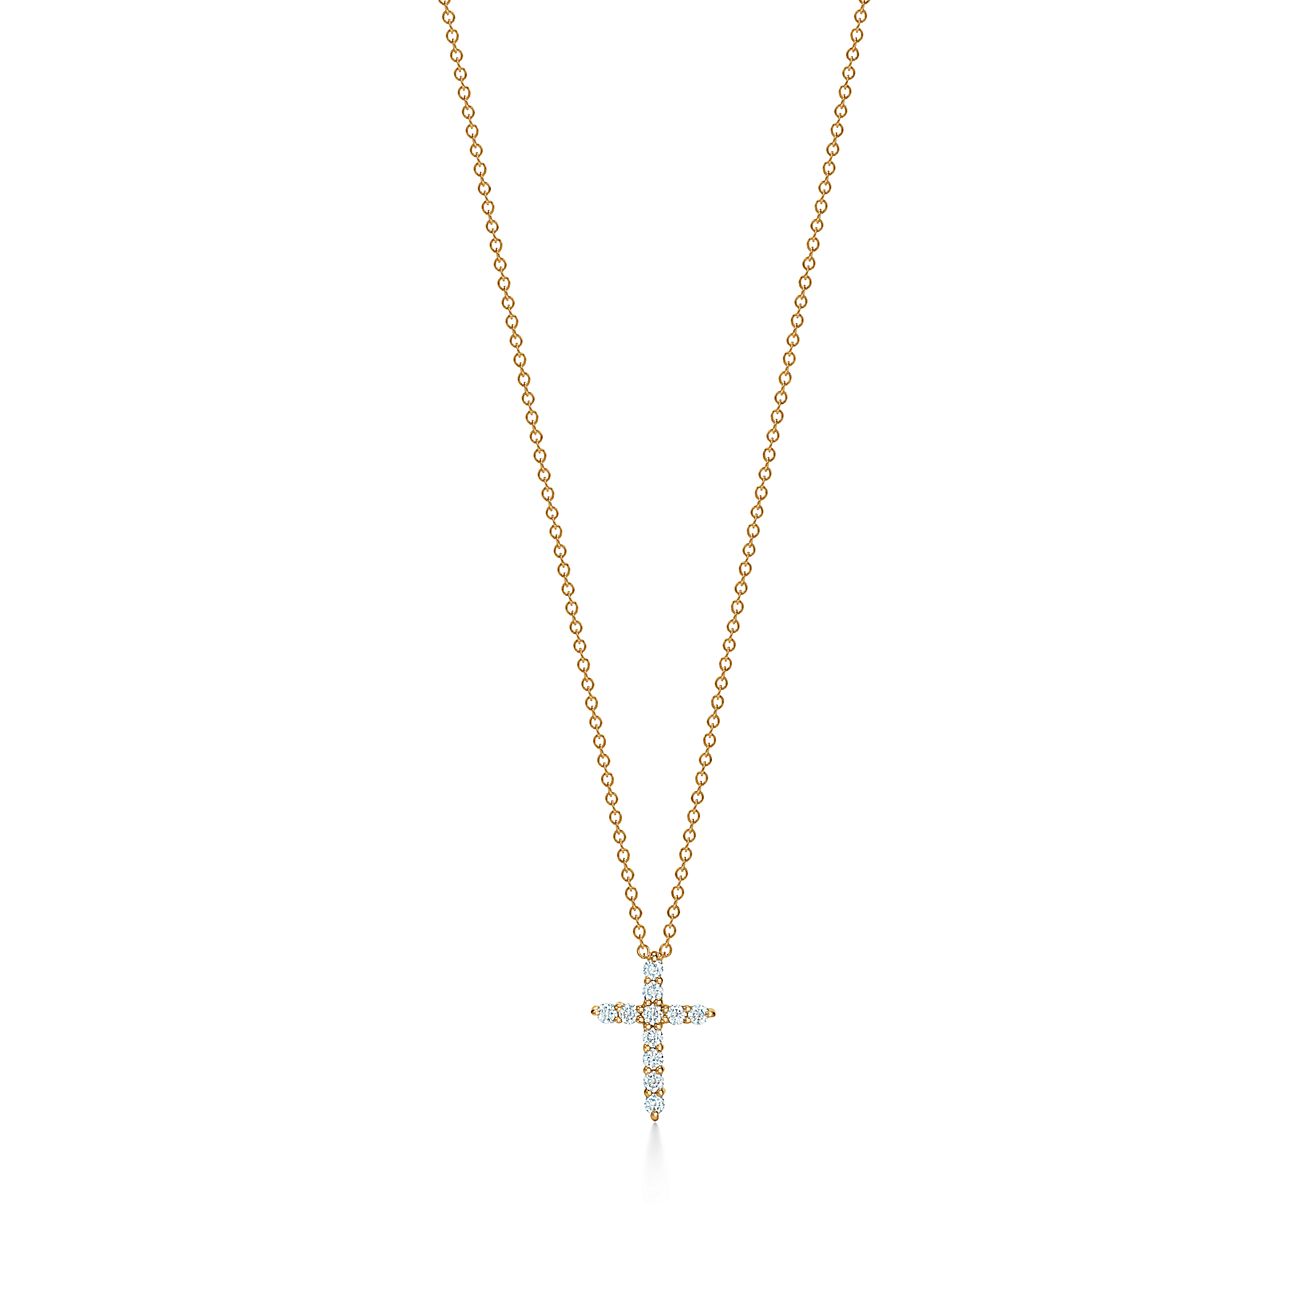 Tiffany HardWear Small Wrap Necklace in Yellow Gold | Tiffany & Co.